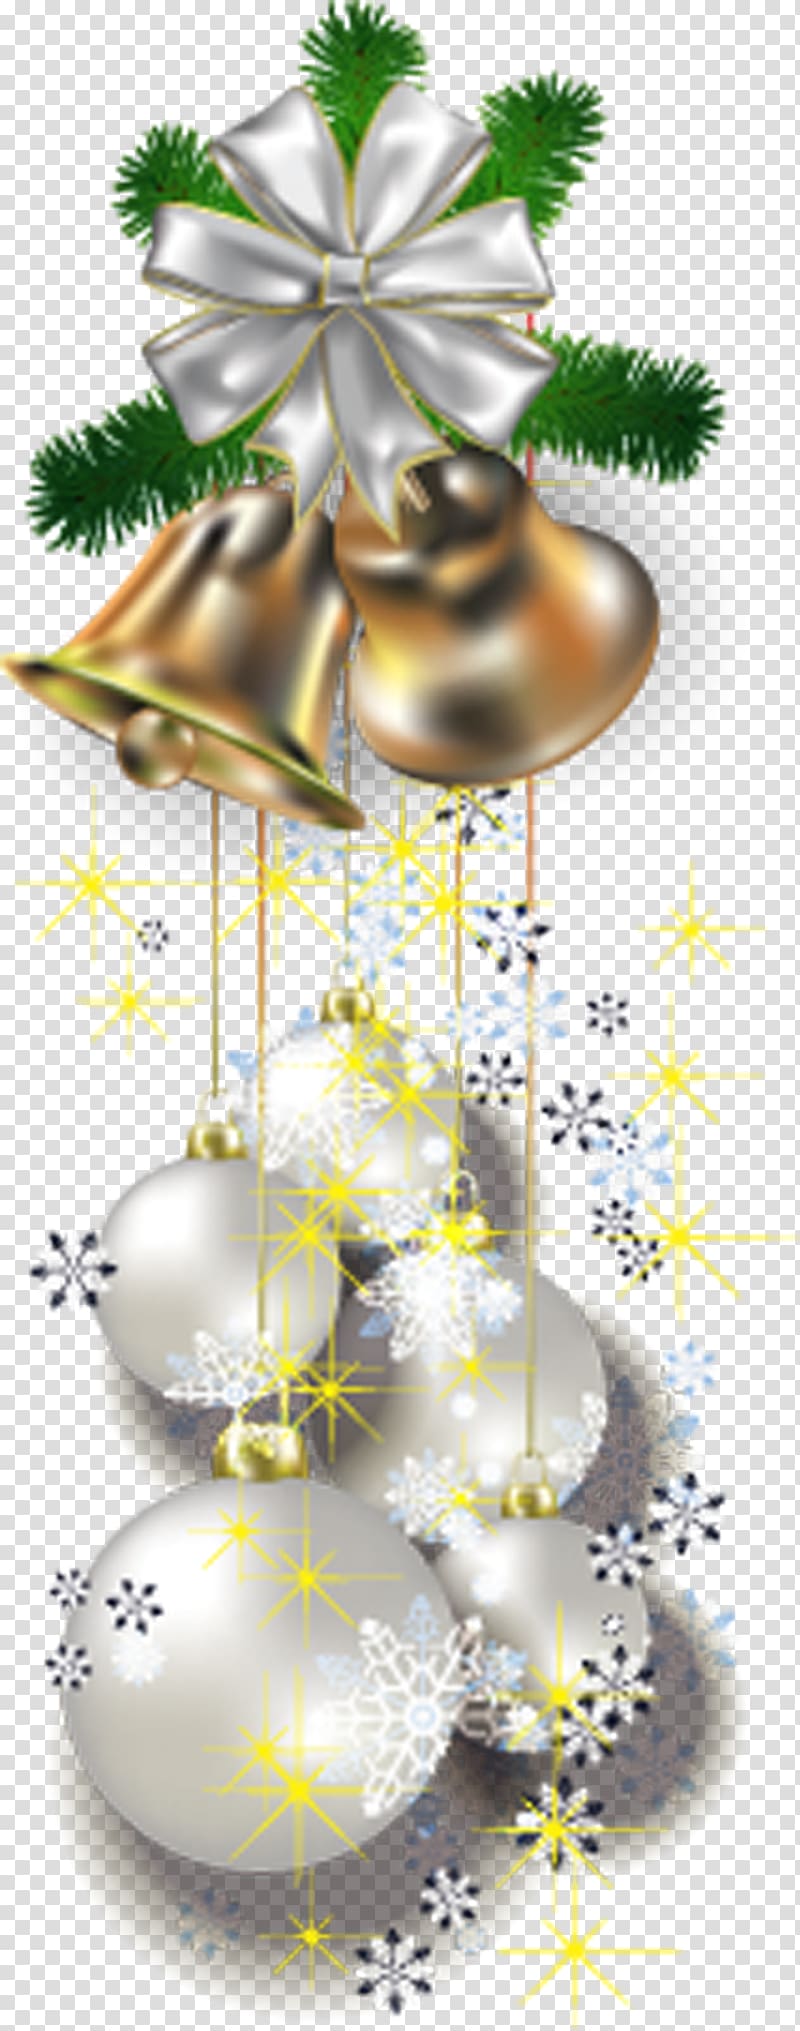 Christmas ornament, clothes button transparent background PNG clipart